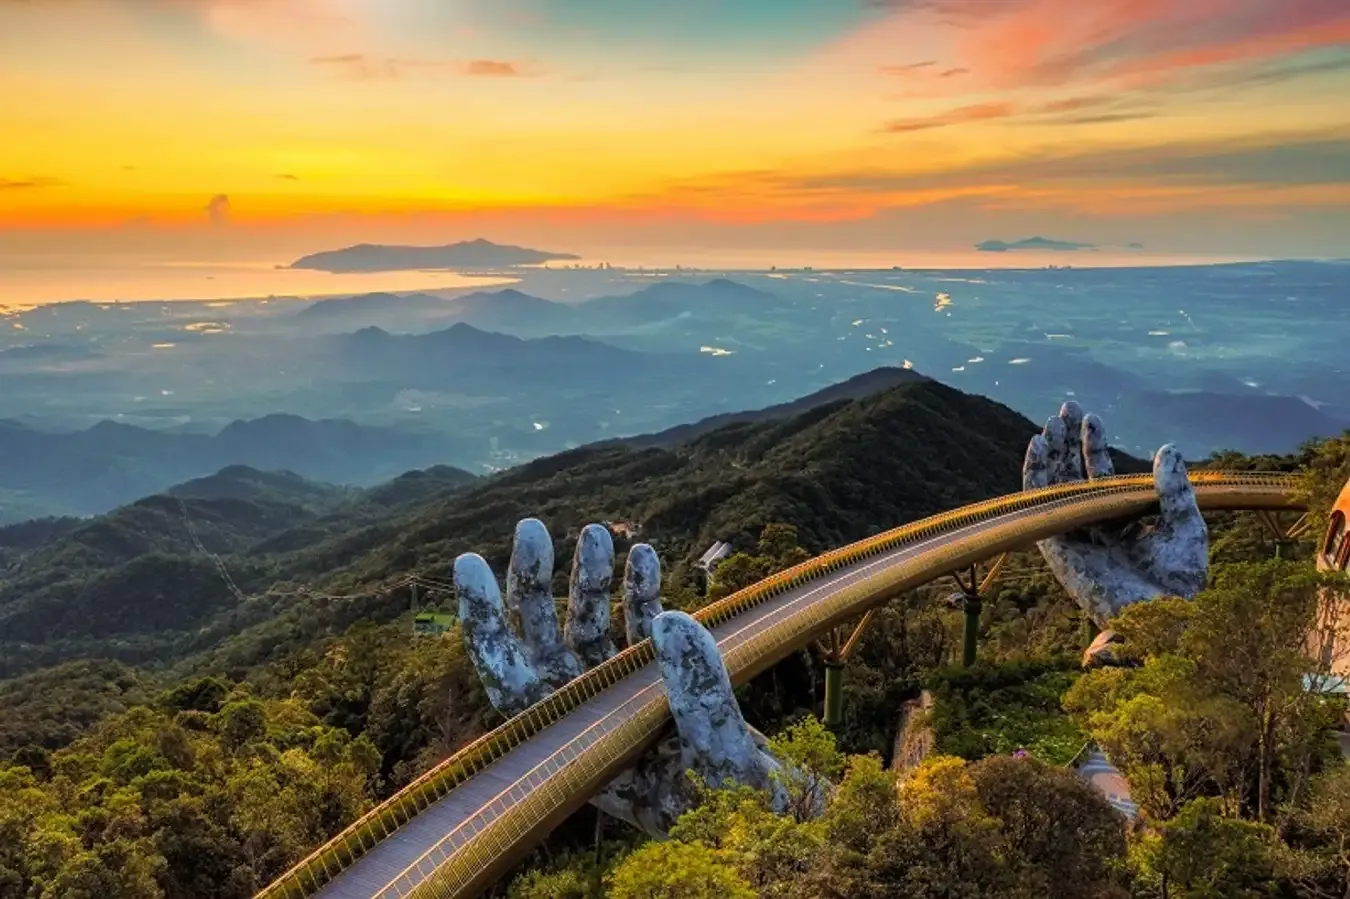 Da Nang's Golden Bridge is captivatingly beautiful